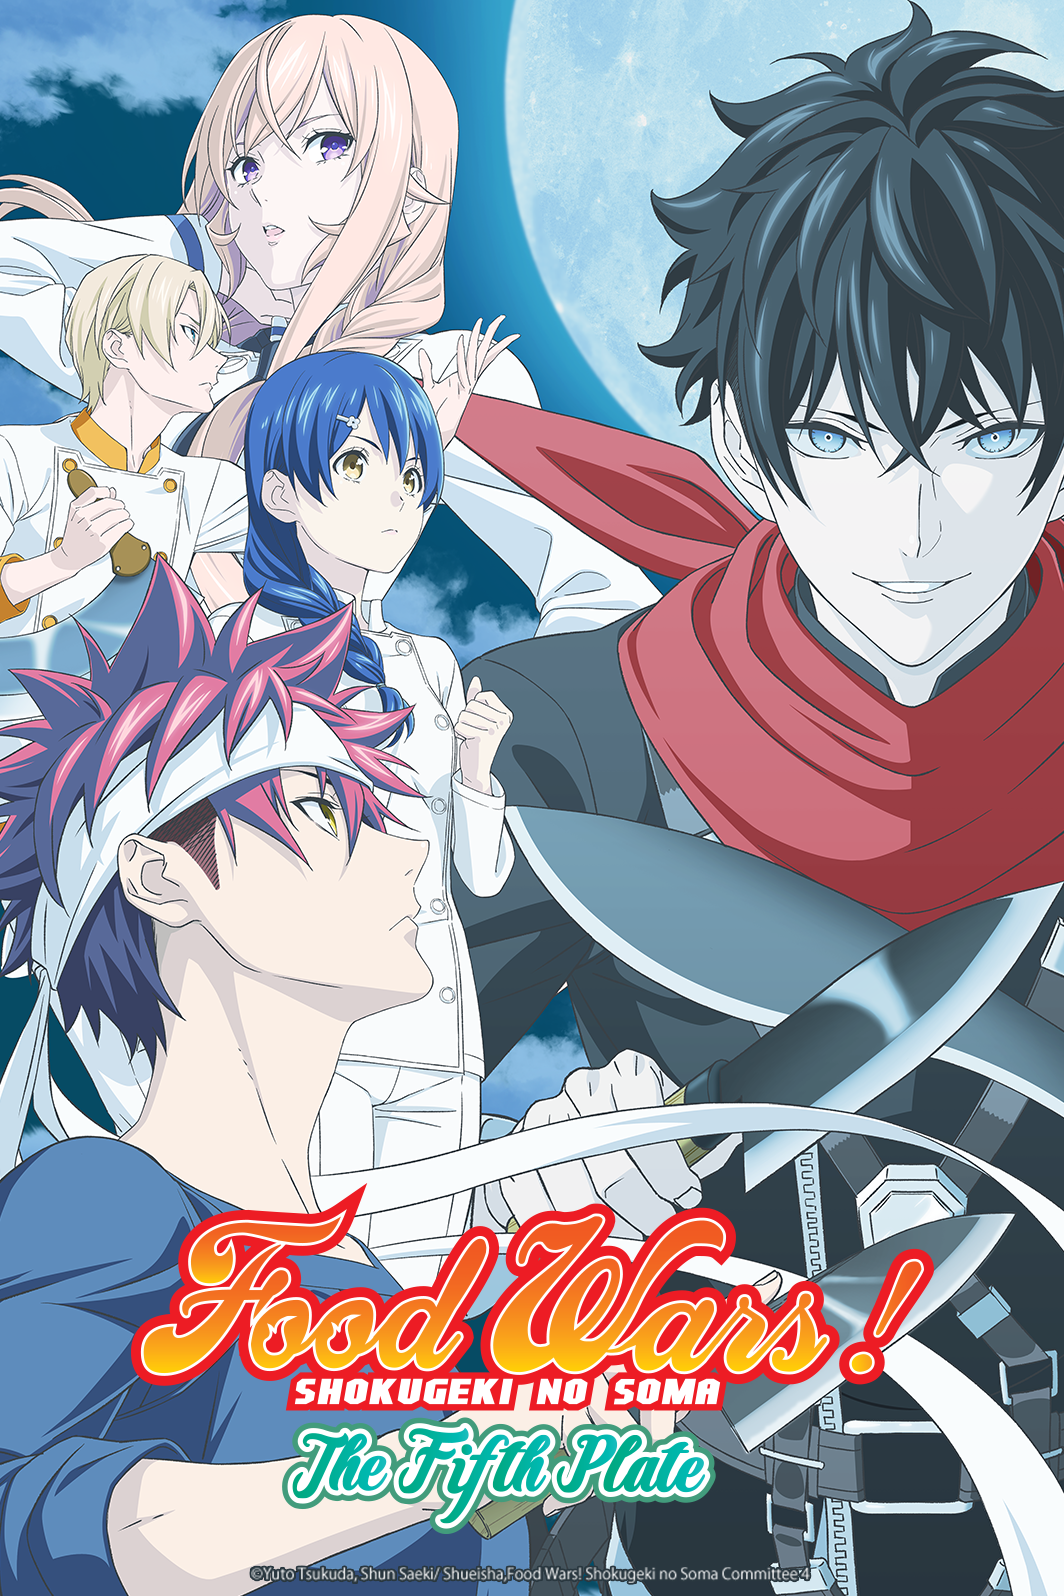 Crunchyroll & Sentai Set New Slate of Home Anime Releases